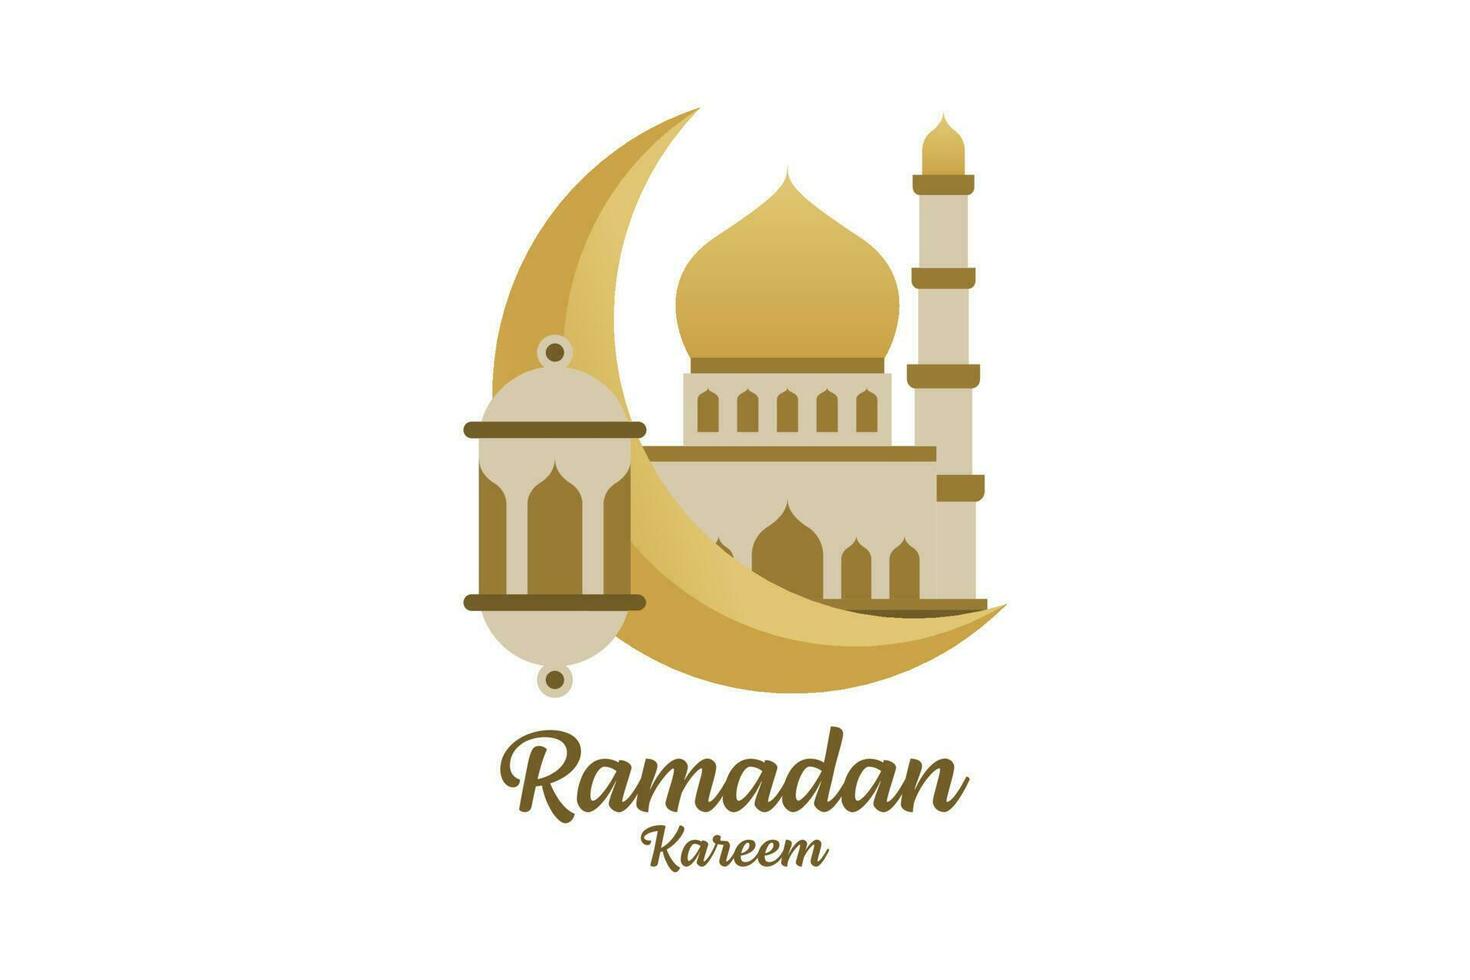 Ramadan kareem vector design illustration